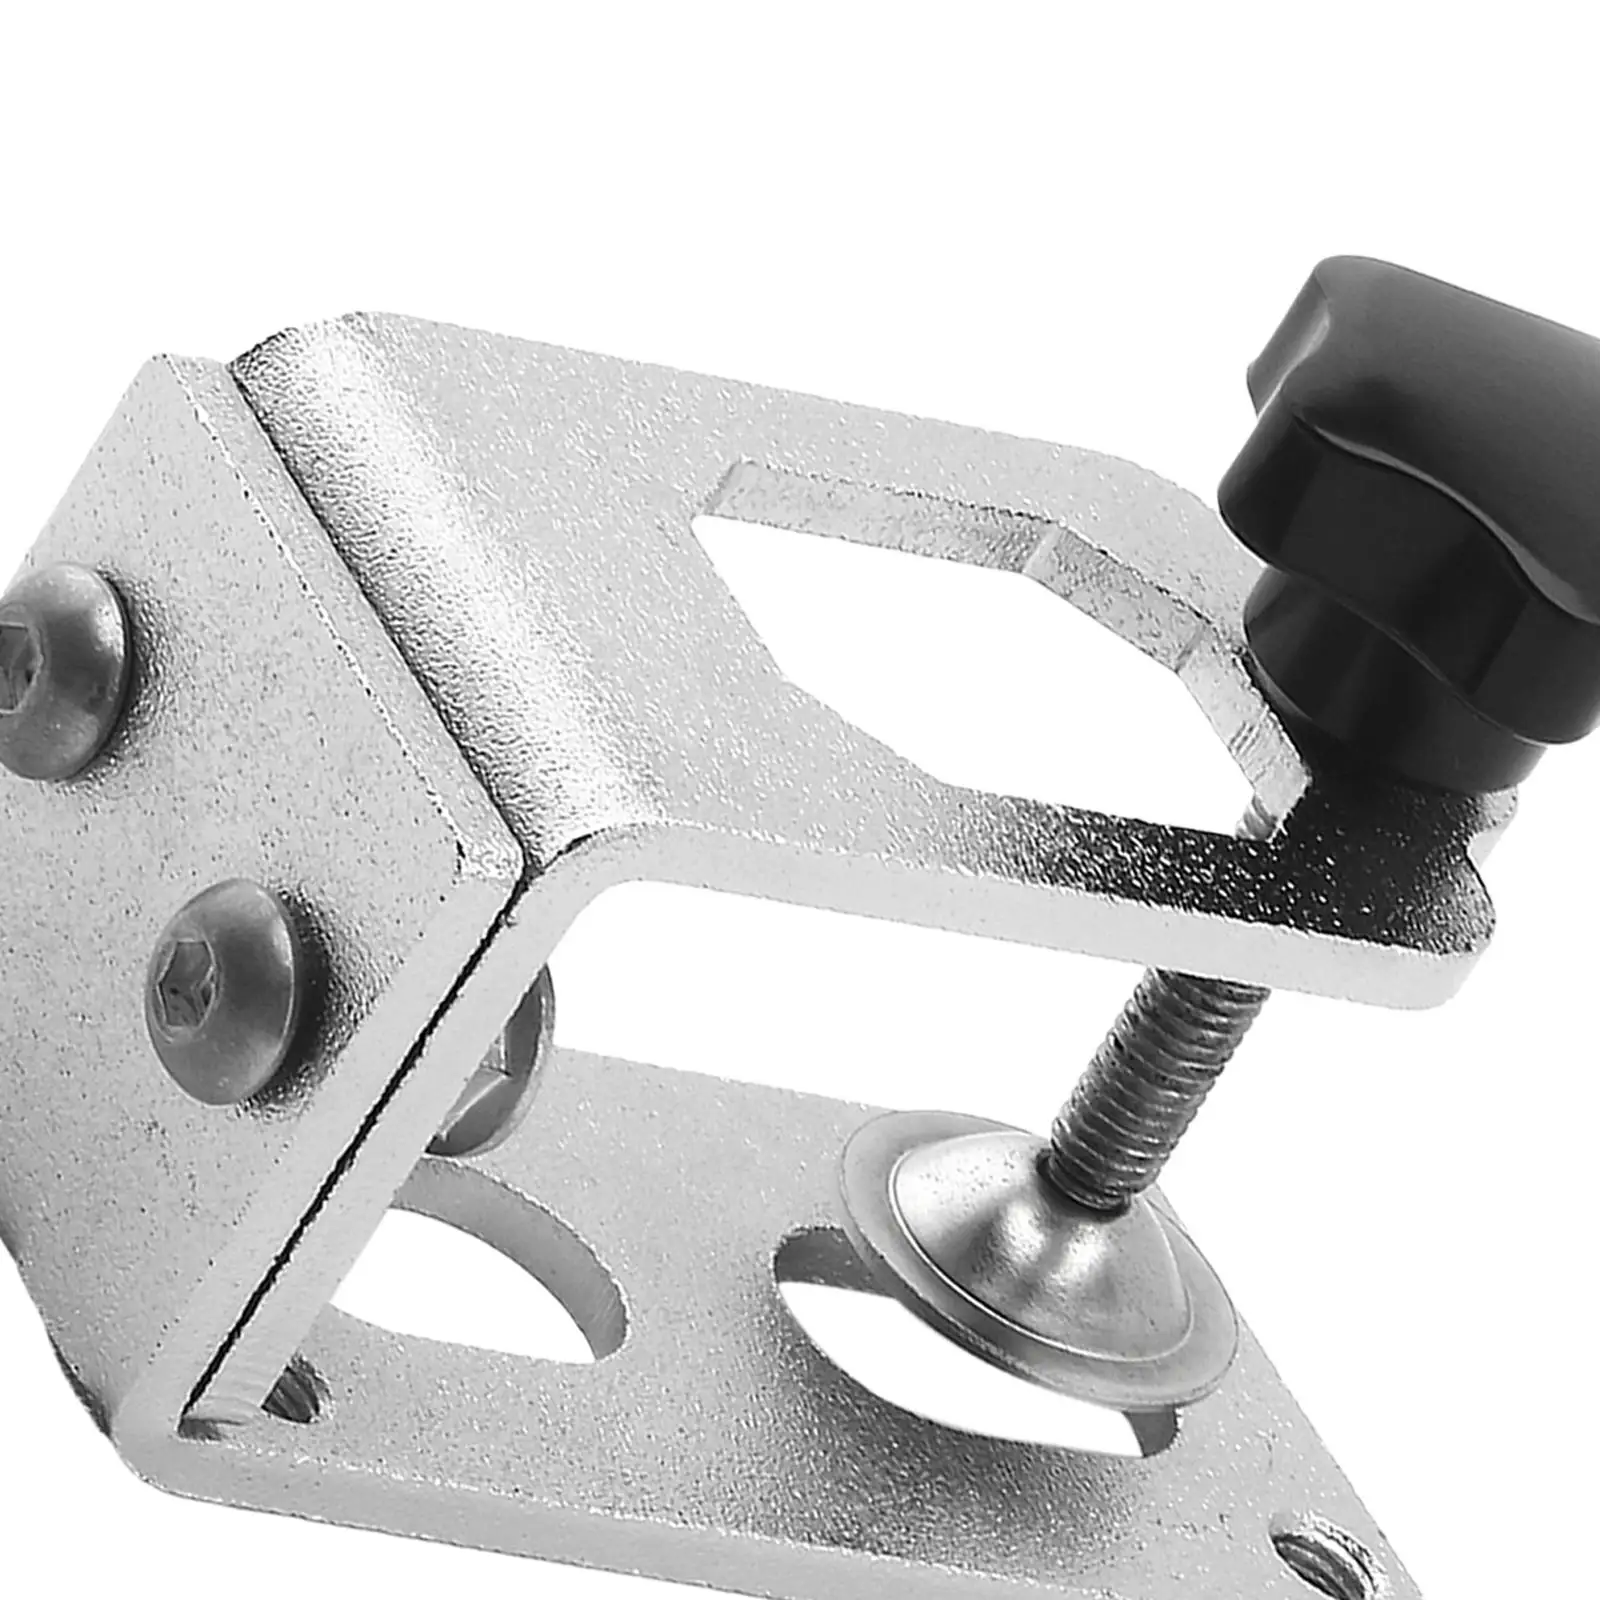 Handbrake Clamp Peripherals Replacement Parts for Truck racings Games